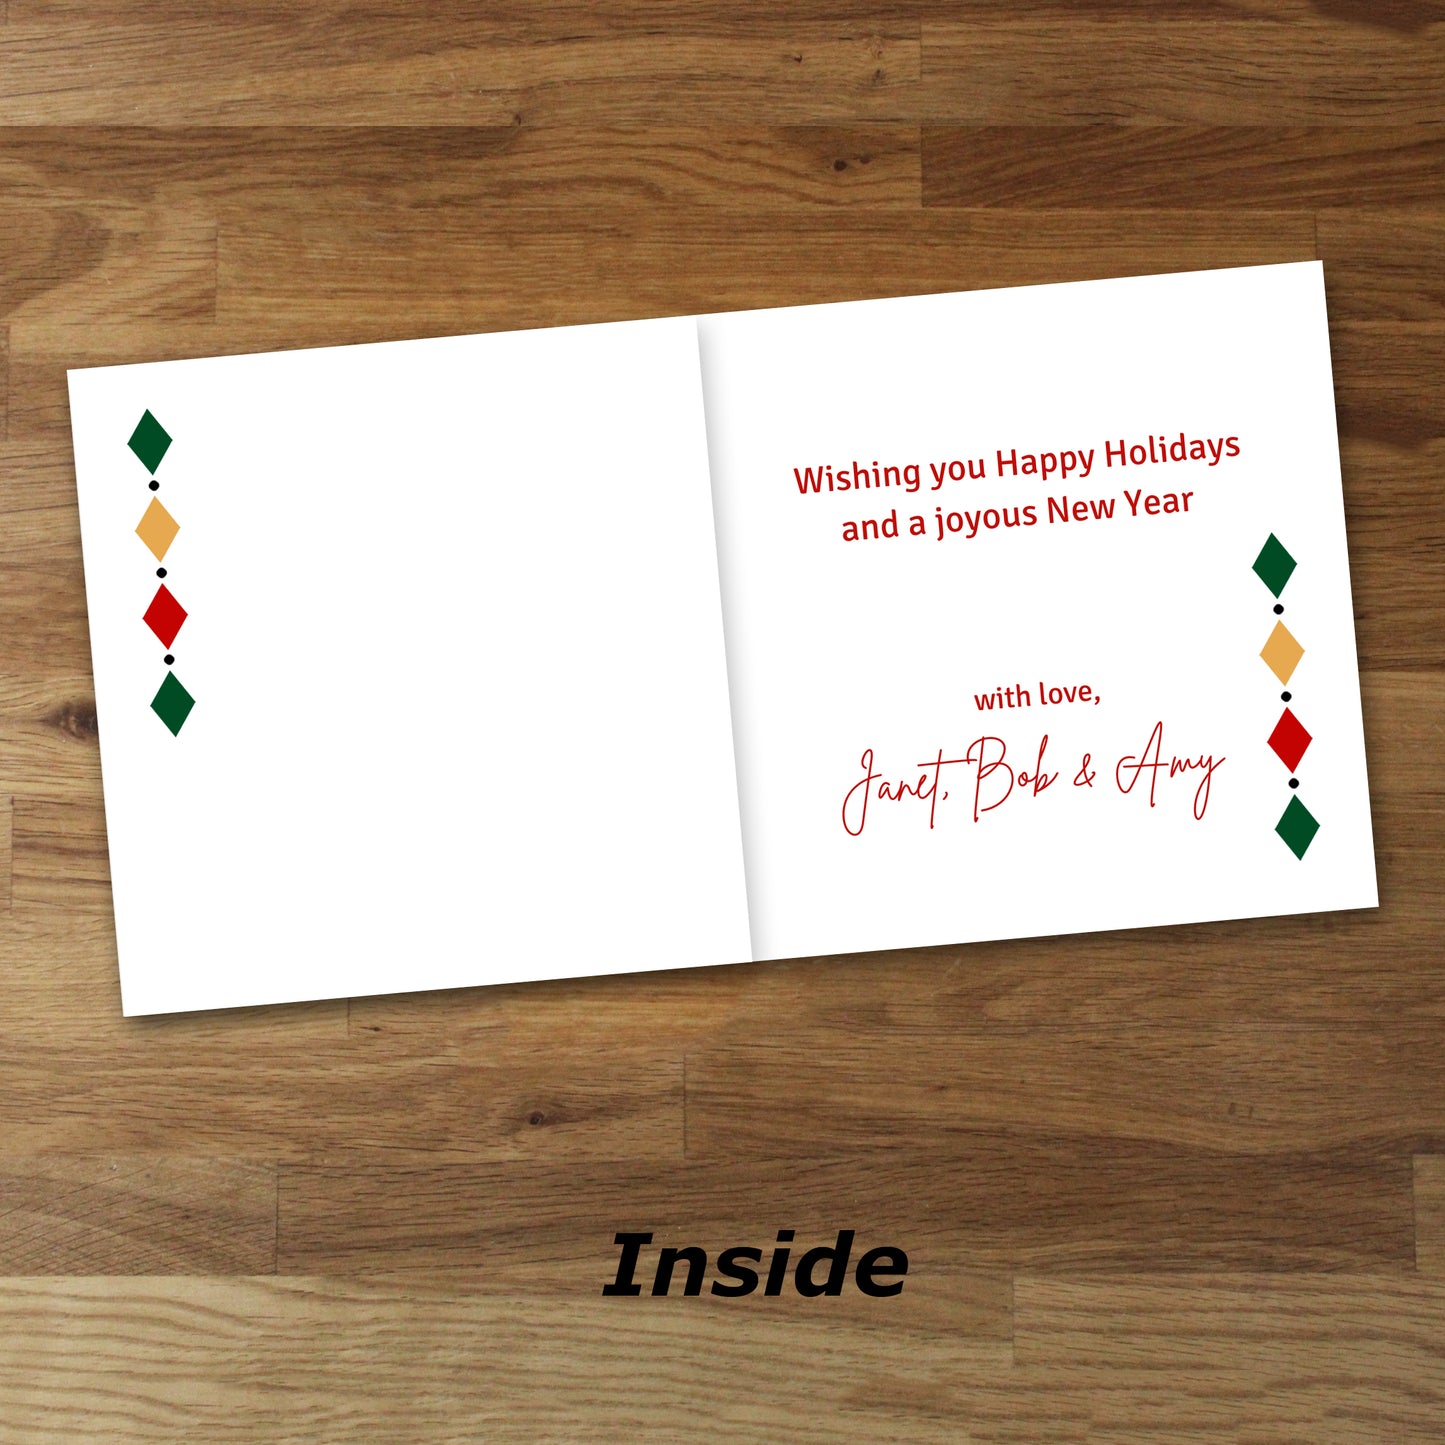 Set of 10 Personalized Nutcracker Drummer Boy Christmas Cards